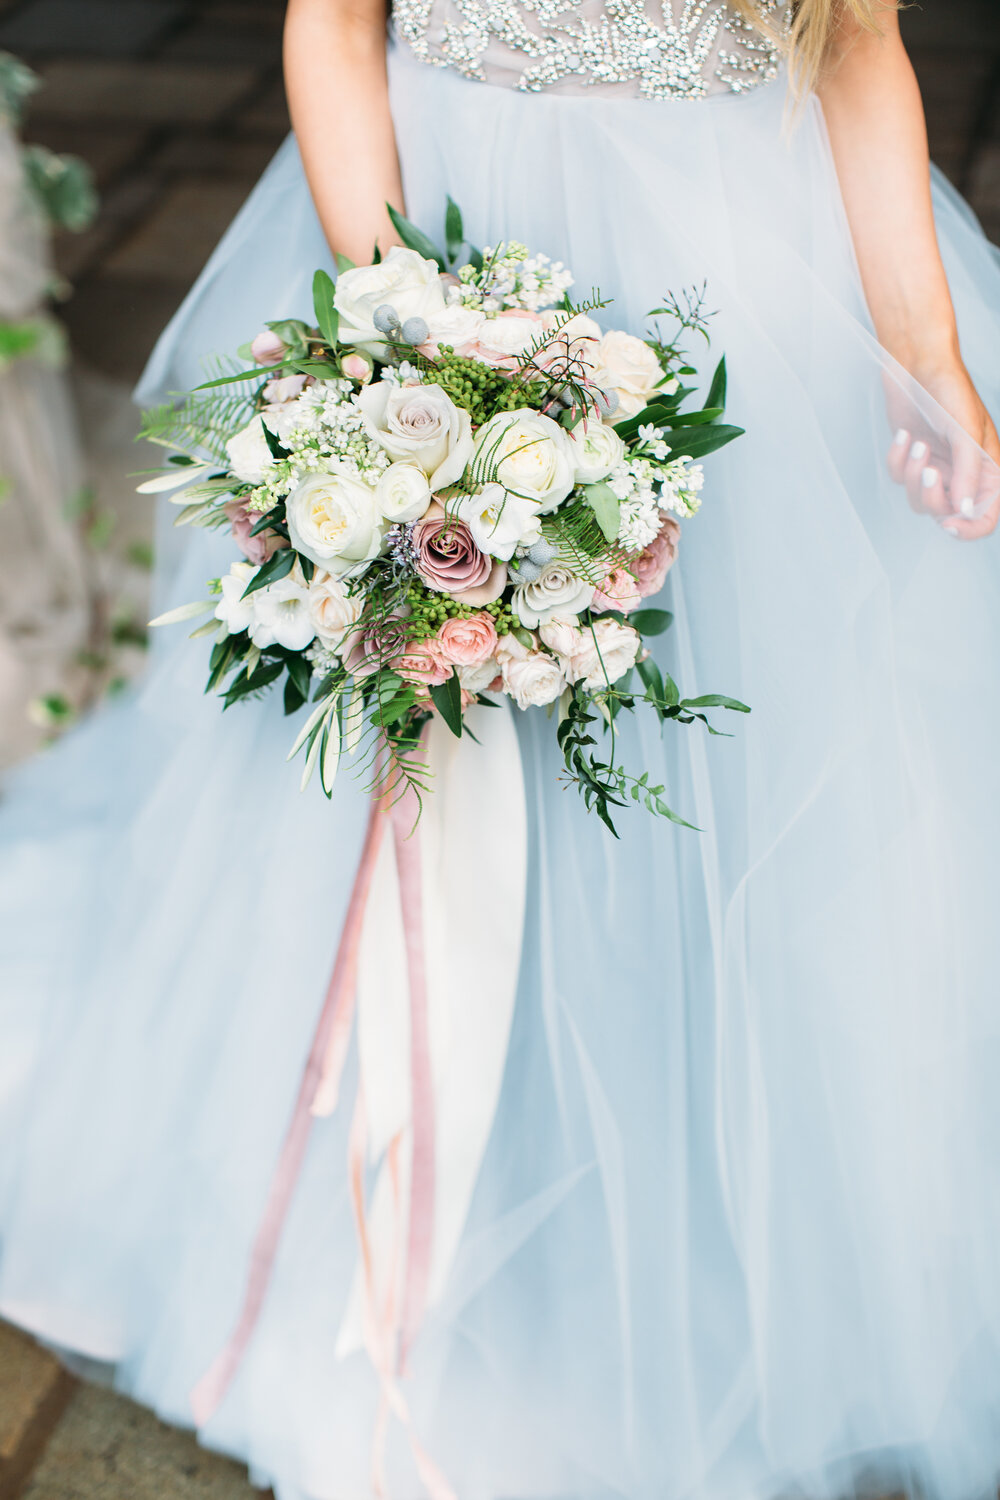 luxury-wedding-bridal-bouquet-details-garden-rose-lilac-lavender-greenery-flowing-ribbon-blushes-whites-upscale-inspiration-northern-california-sonoma-v-sattui-florist-design-violette-fleurs-anna-perevertaylo.jpg